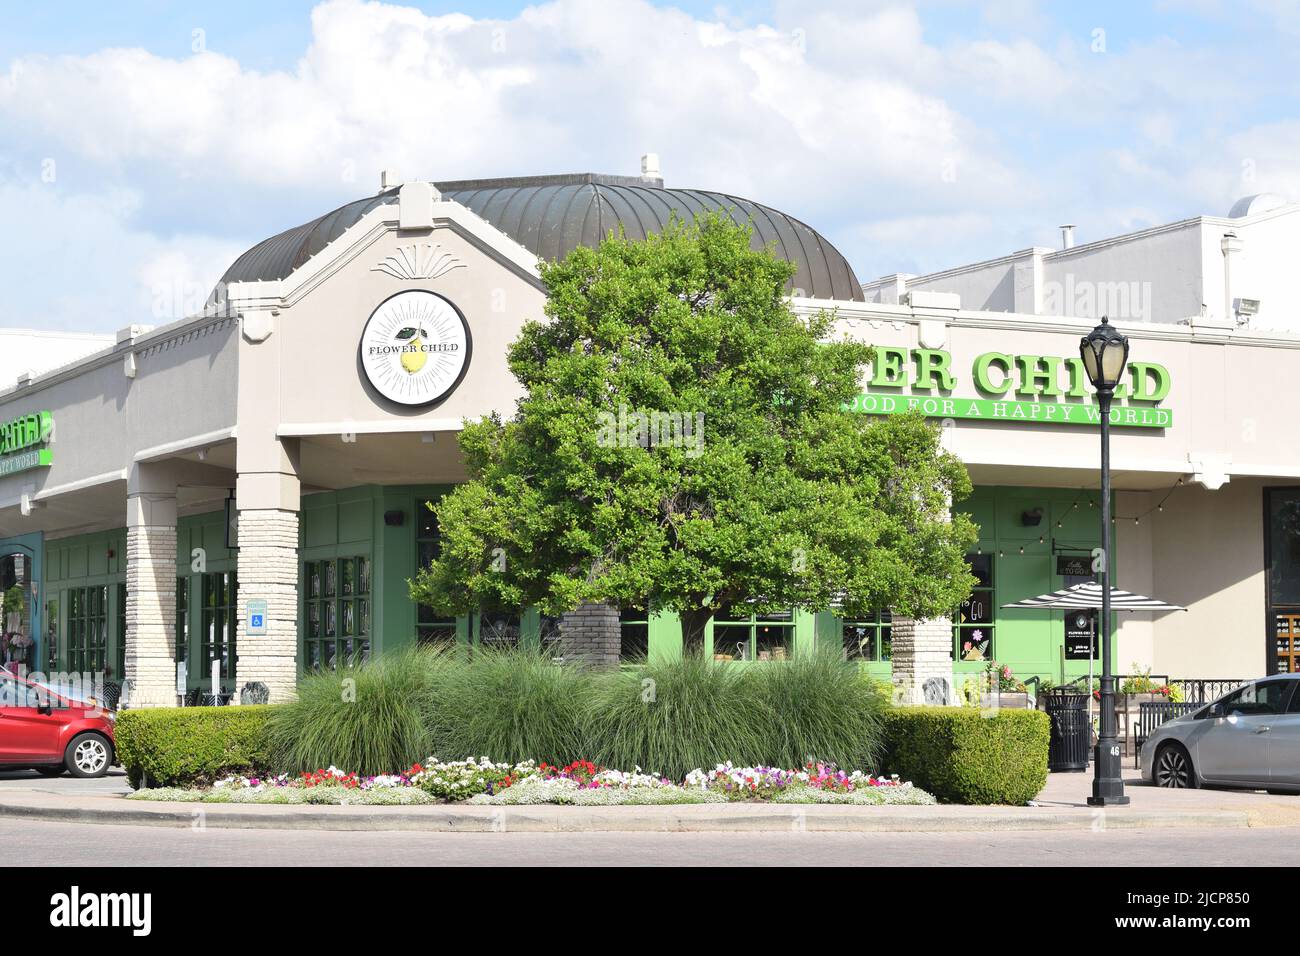 Flower Child Restaurant in Dallas, Texas Stockfoto